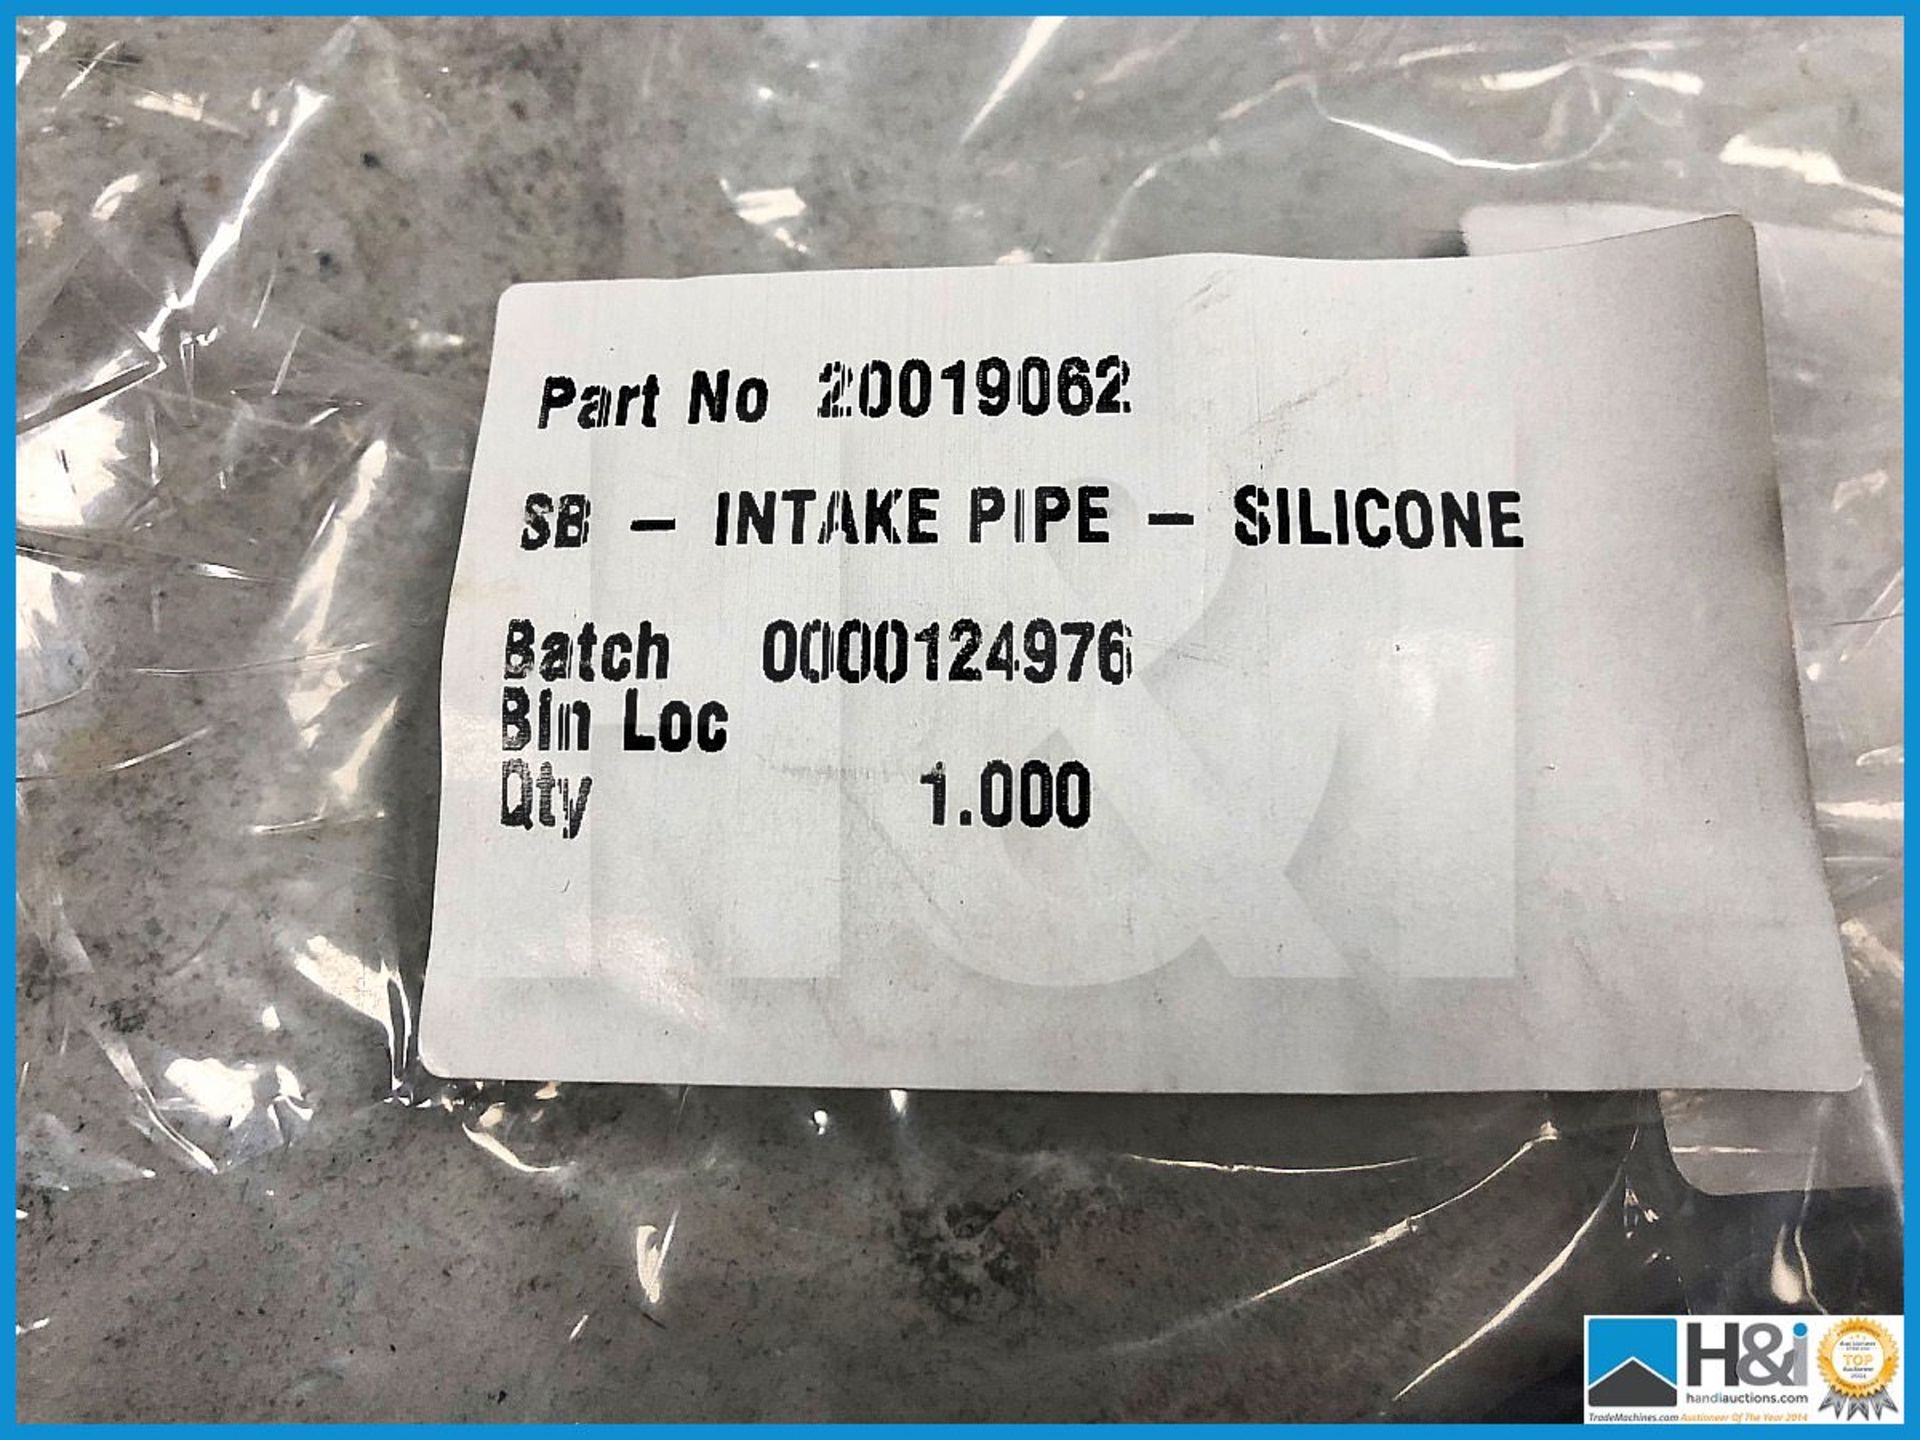 3 x Subaru intake pipe - silicone. Code: 20019062. Lot 104. RRP GBP 740 - Image 5 of 5